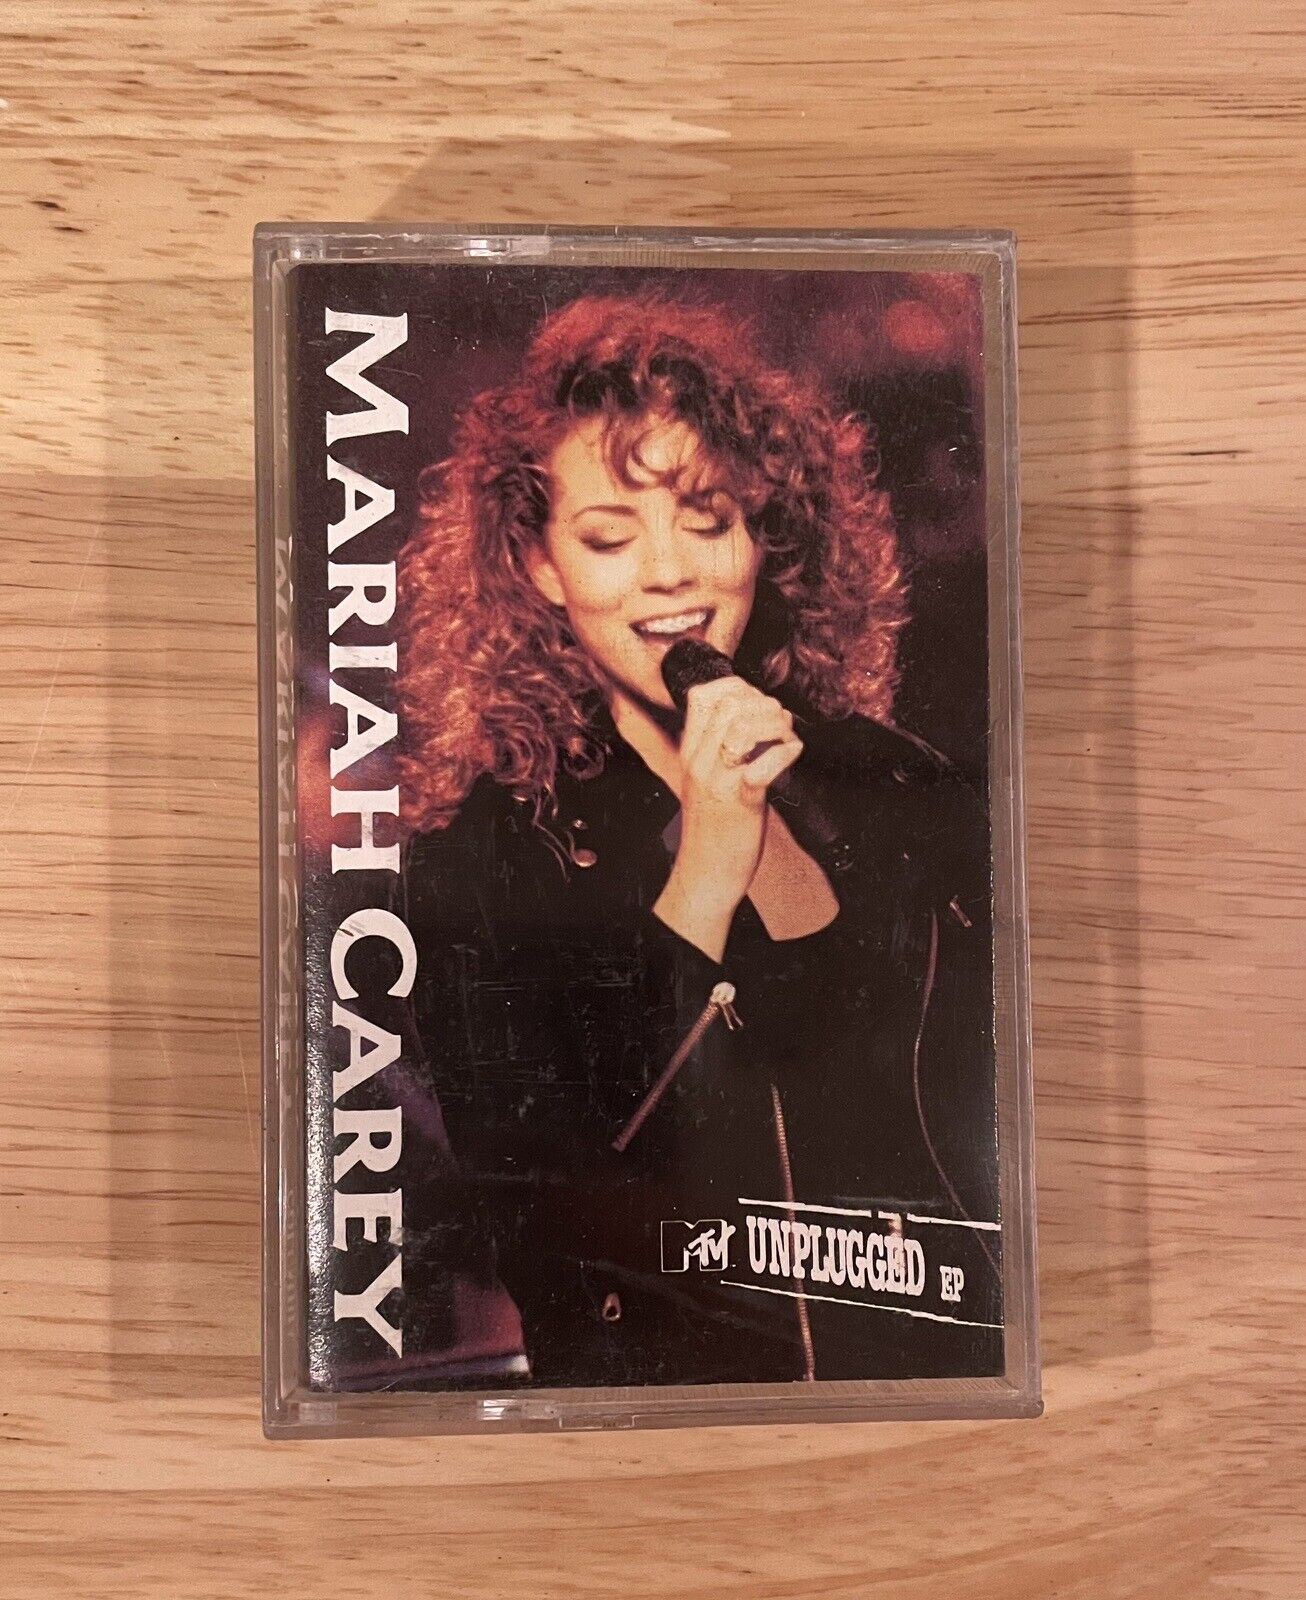 Mariah Carey - MTV UNPLUGGED Cassette Tape, VTG 1992, Emotions Visions